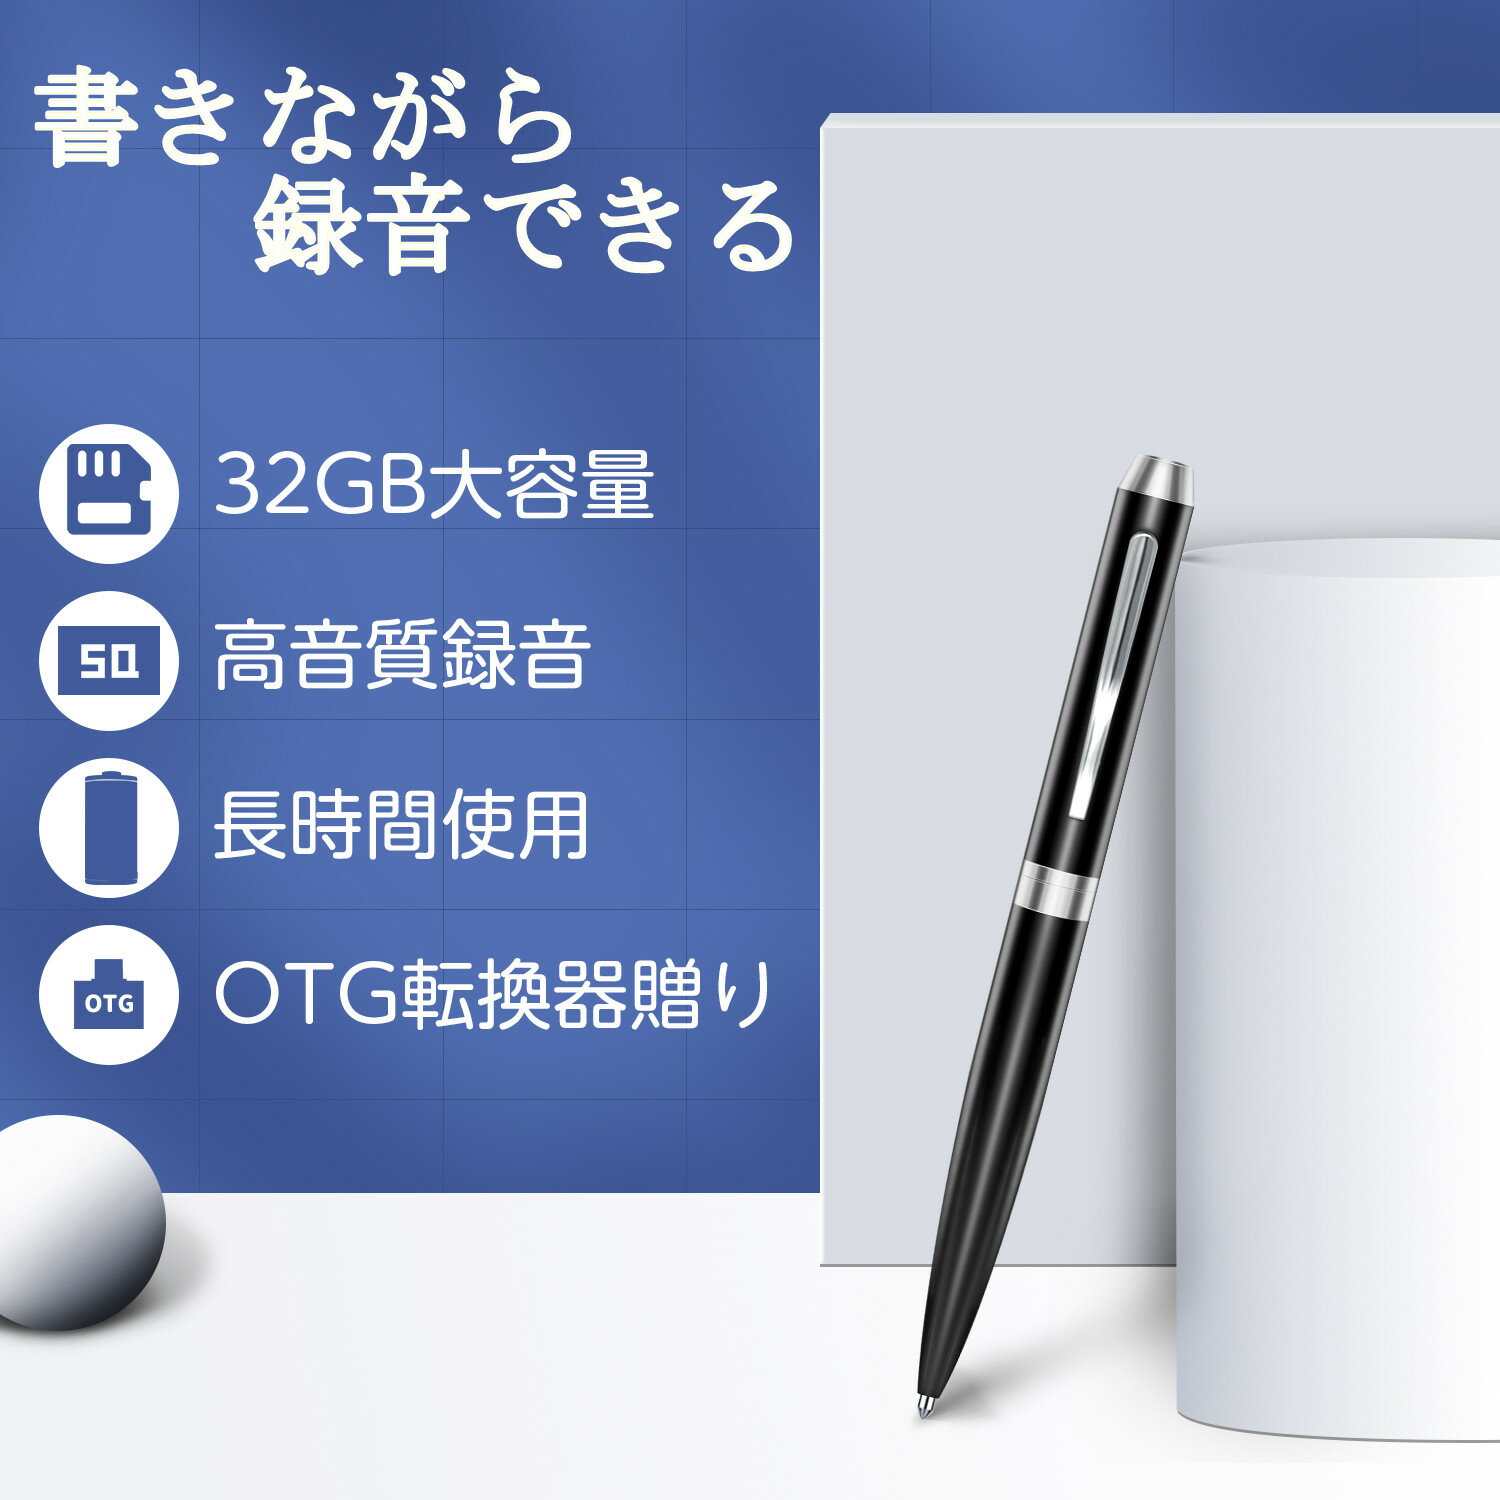 QZT ボイスレコーダー ペン型 32GB 高音質 ペン型ボイスレコーダー 録音機 icレコーダー ボールペン型 ワンボタン録音 音声検知録音 小型ボイスレコーダー 高音質 高性能 長時間録音 遠距離録音 OTG対応 5本替え芯付き 日本語説明書